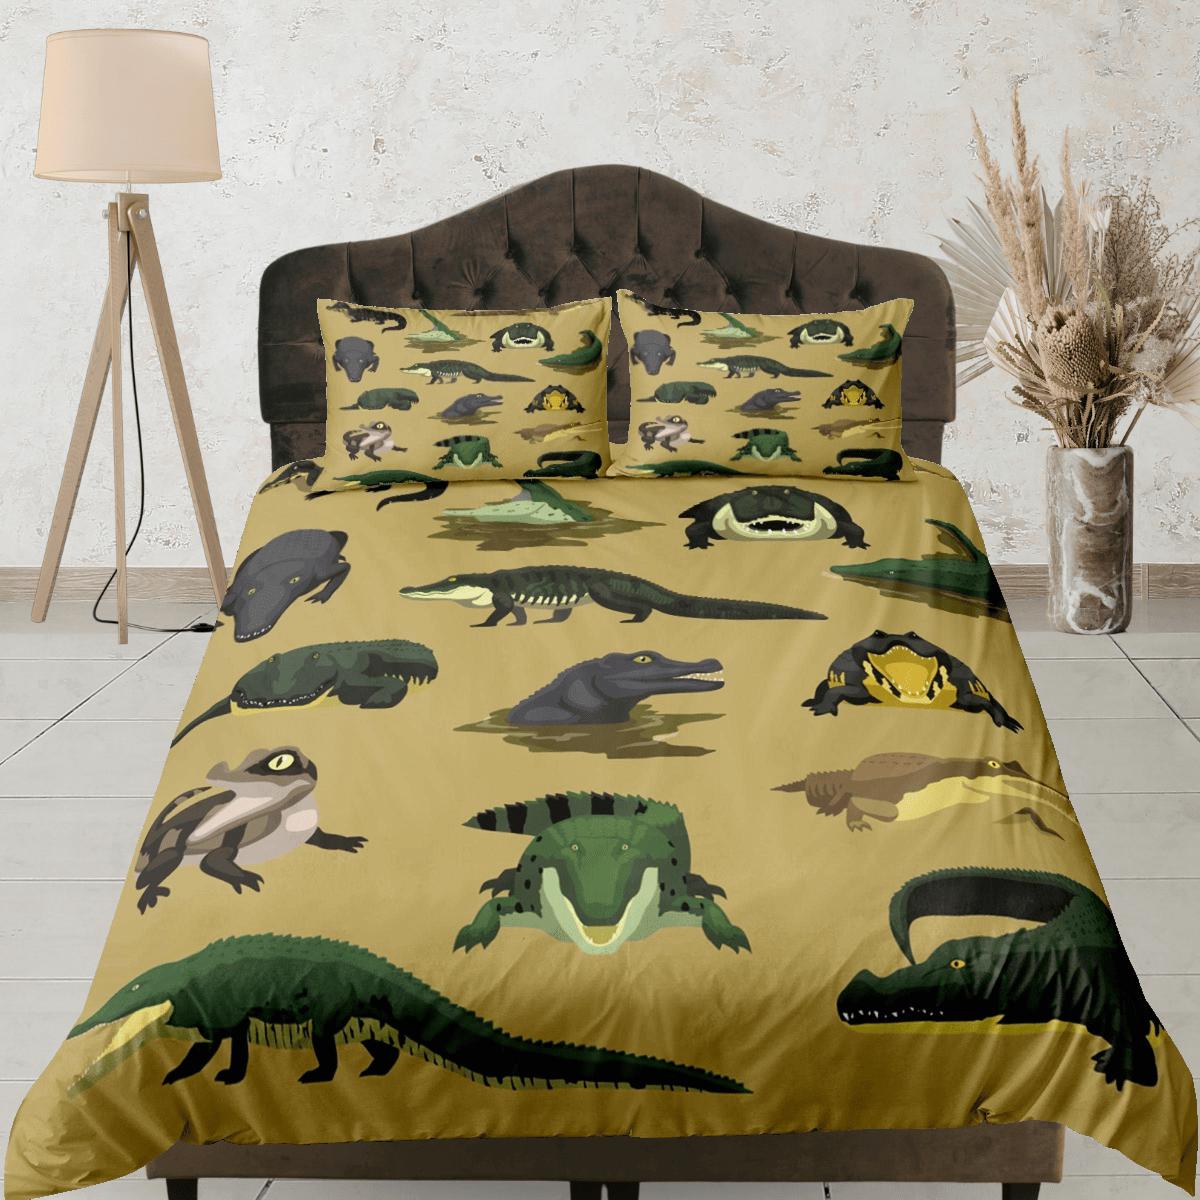 daintyduvet Crocodile bedding, kids bedding full, cute duvet cover set, crocodile nursery bed decor, colorful toddler bedding alligator